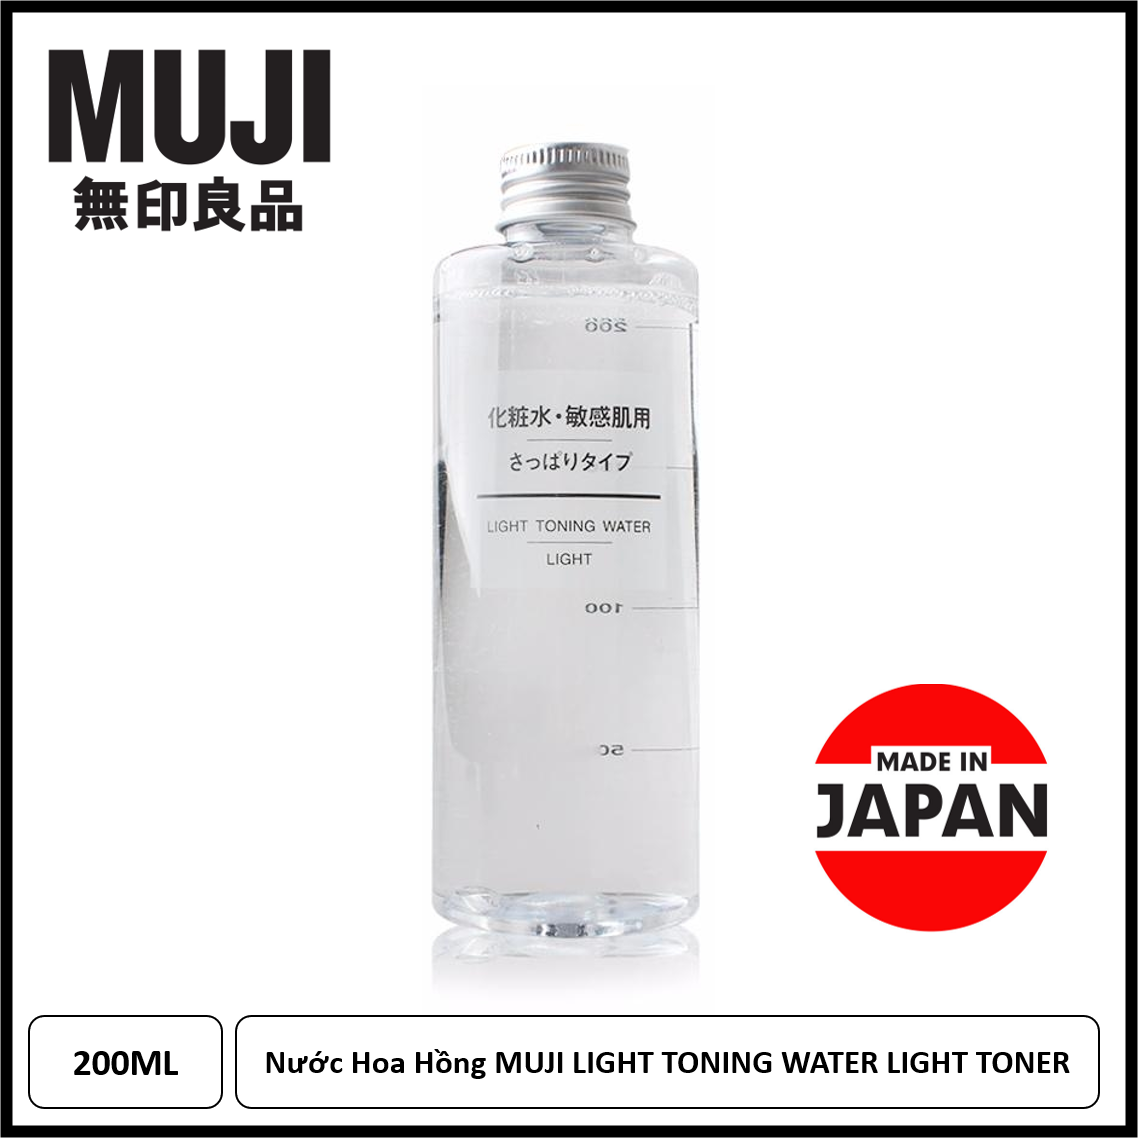 Nước hoa hồng Muji Light Toning Water Toner 200ml - Light